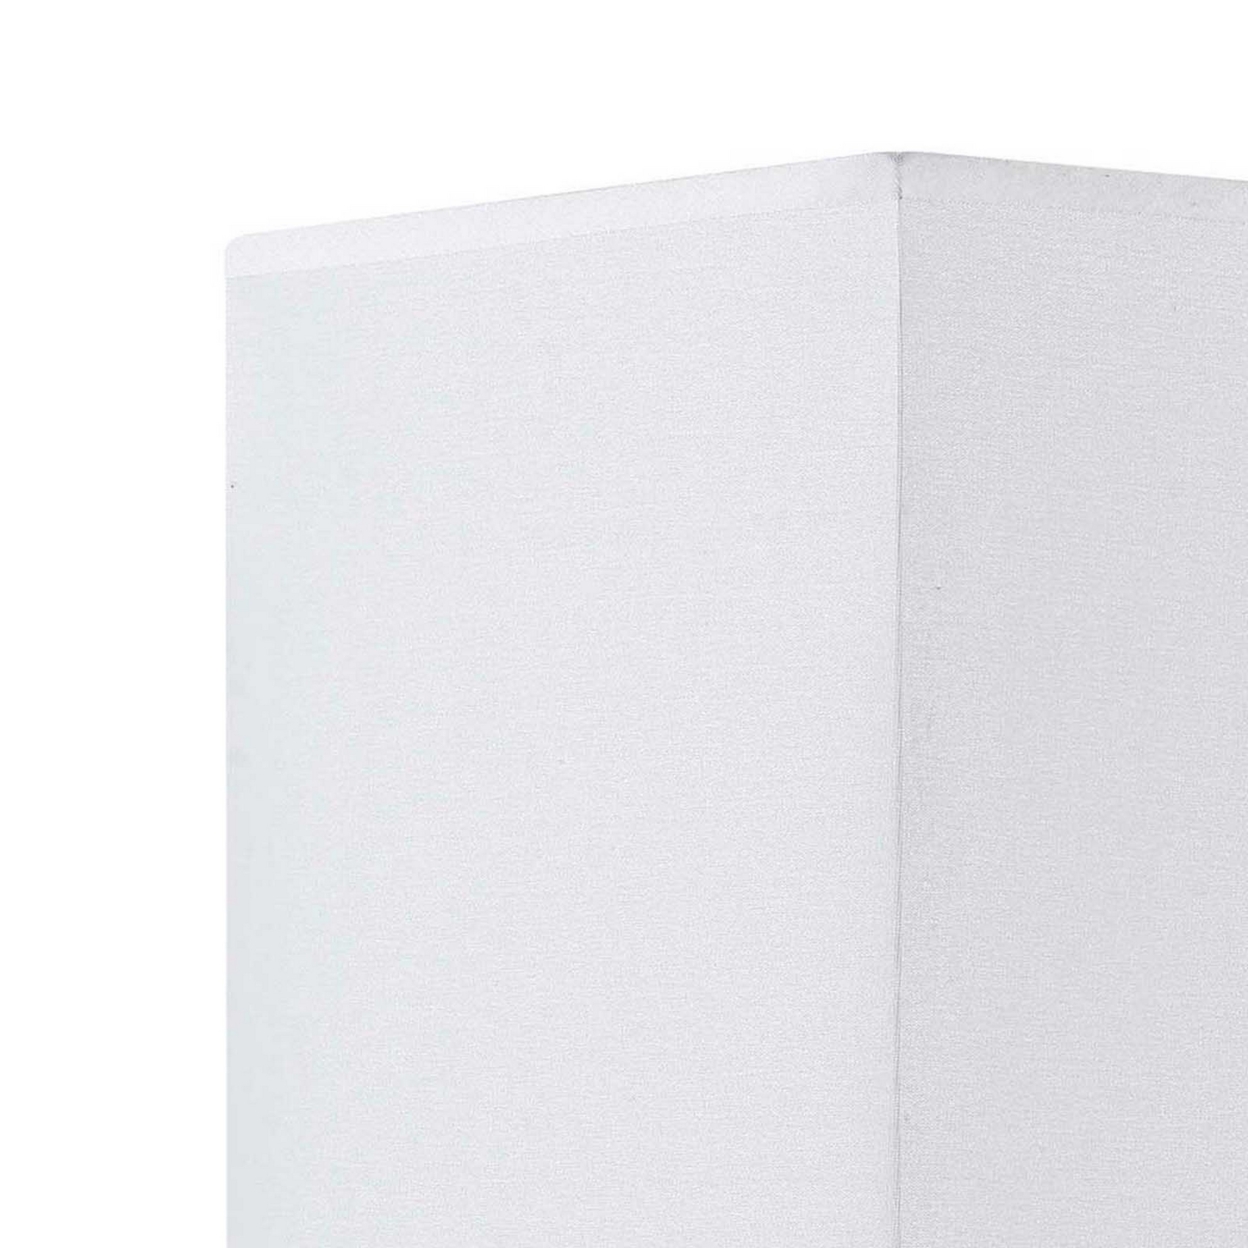 12 Inch Modern Wall Lamp With Fabric Shade, On Off Rocker Switch, White- Saltoro Sherpi